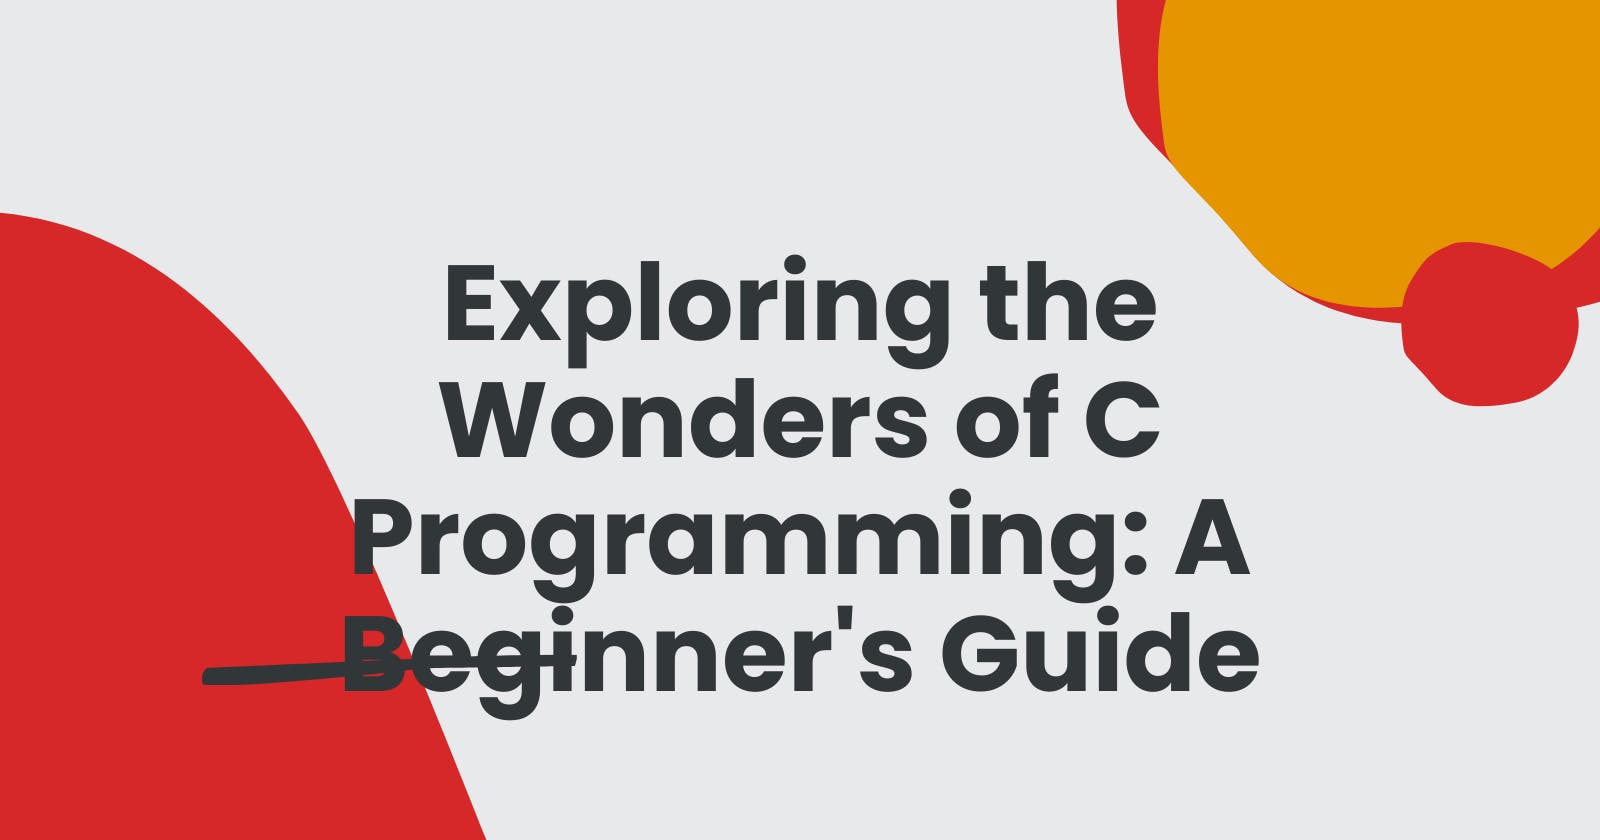 Exploring the Wonders of C Programming: A Beginner's Guide